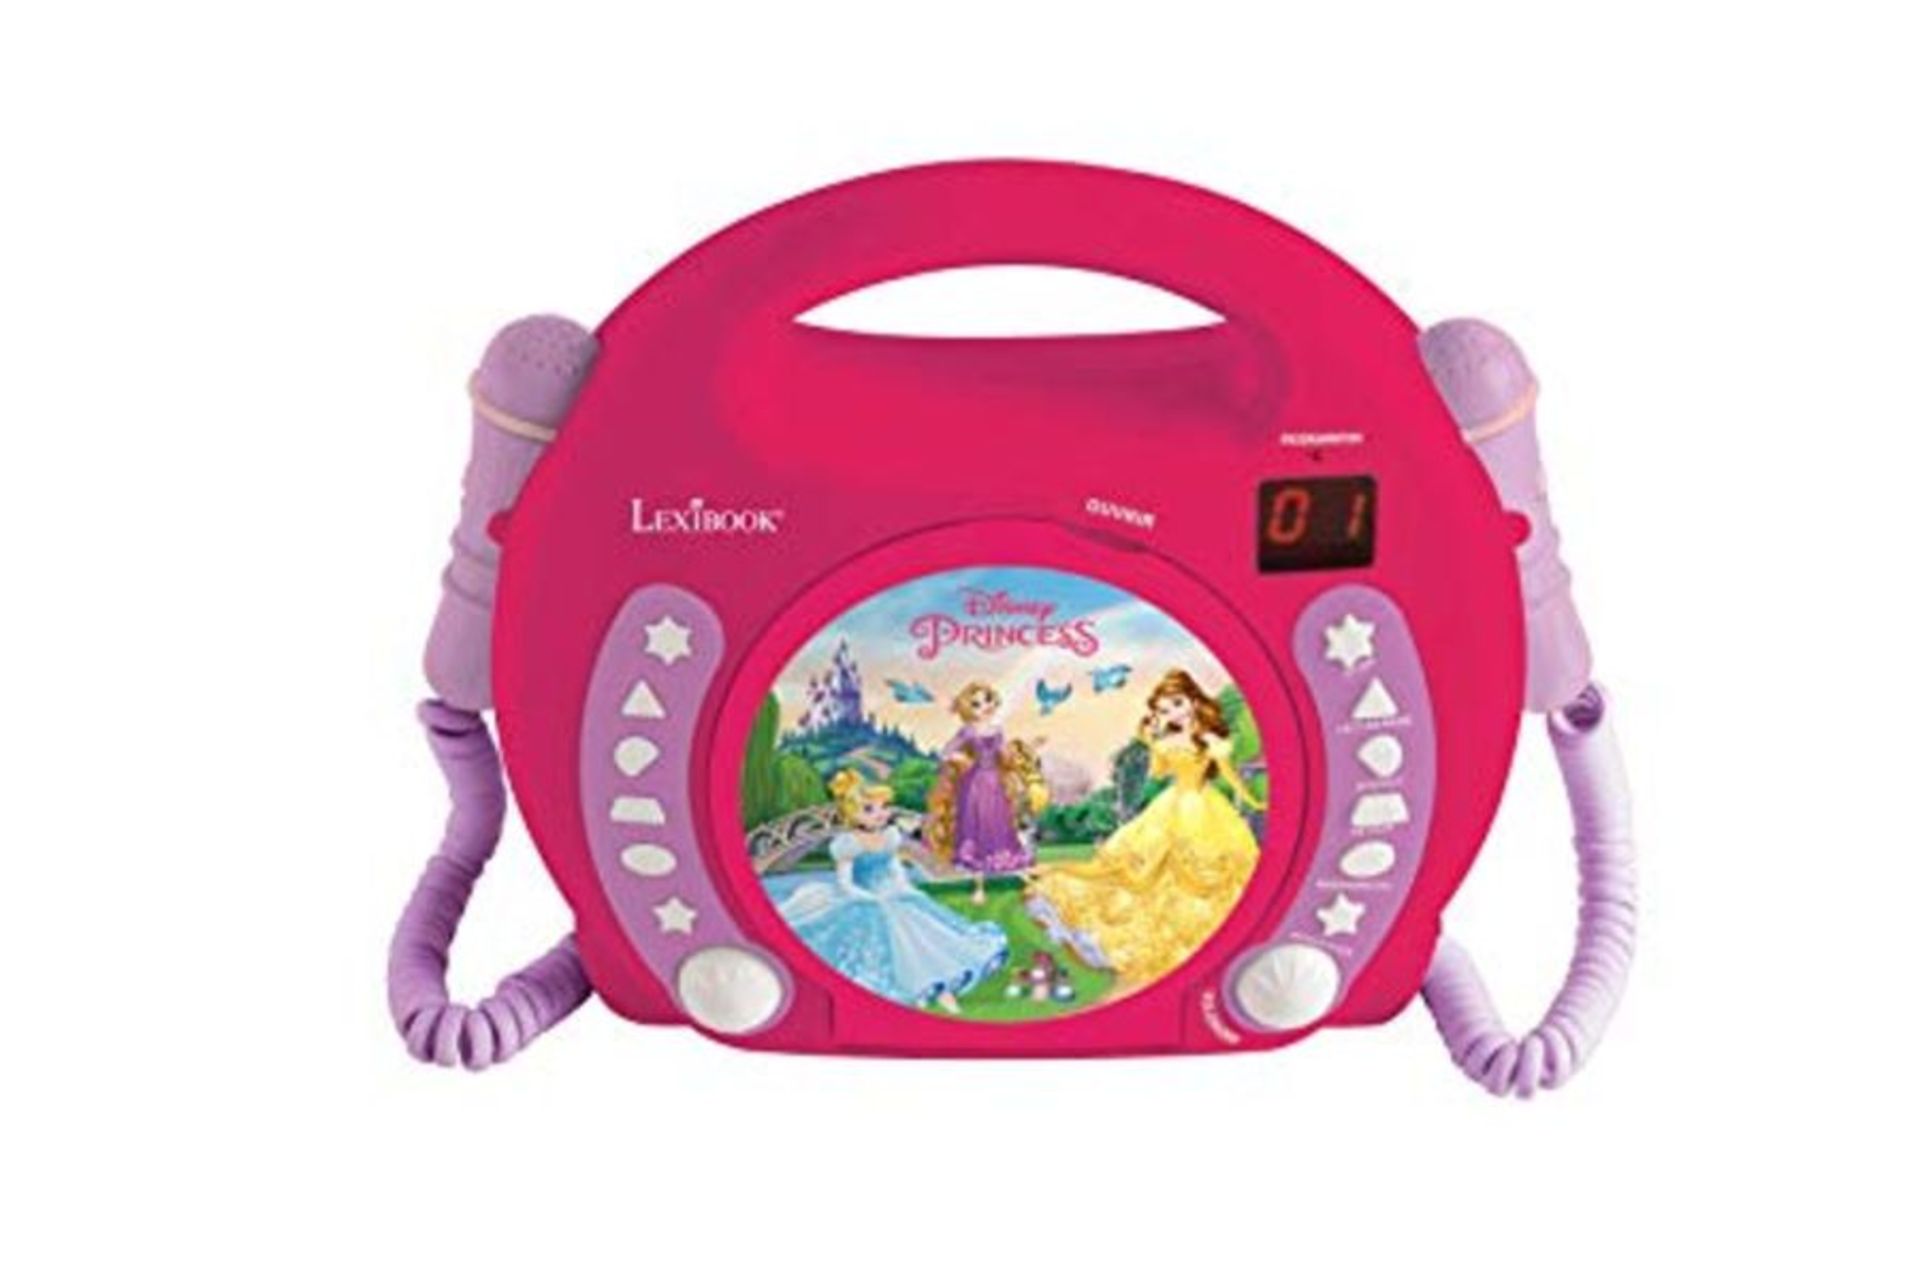 Lexibook Disney Princess Rapunzel CD player for kids with 2 toy microphones, headphone